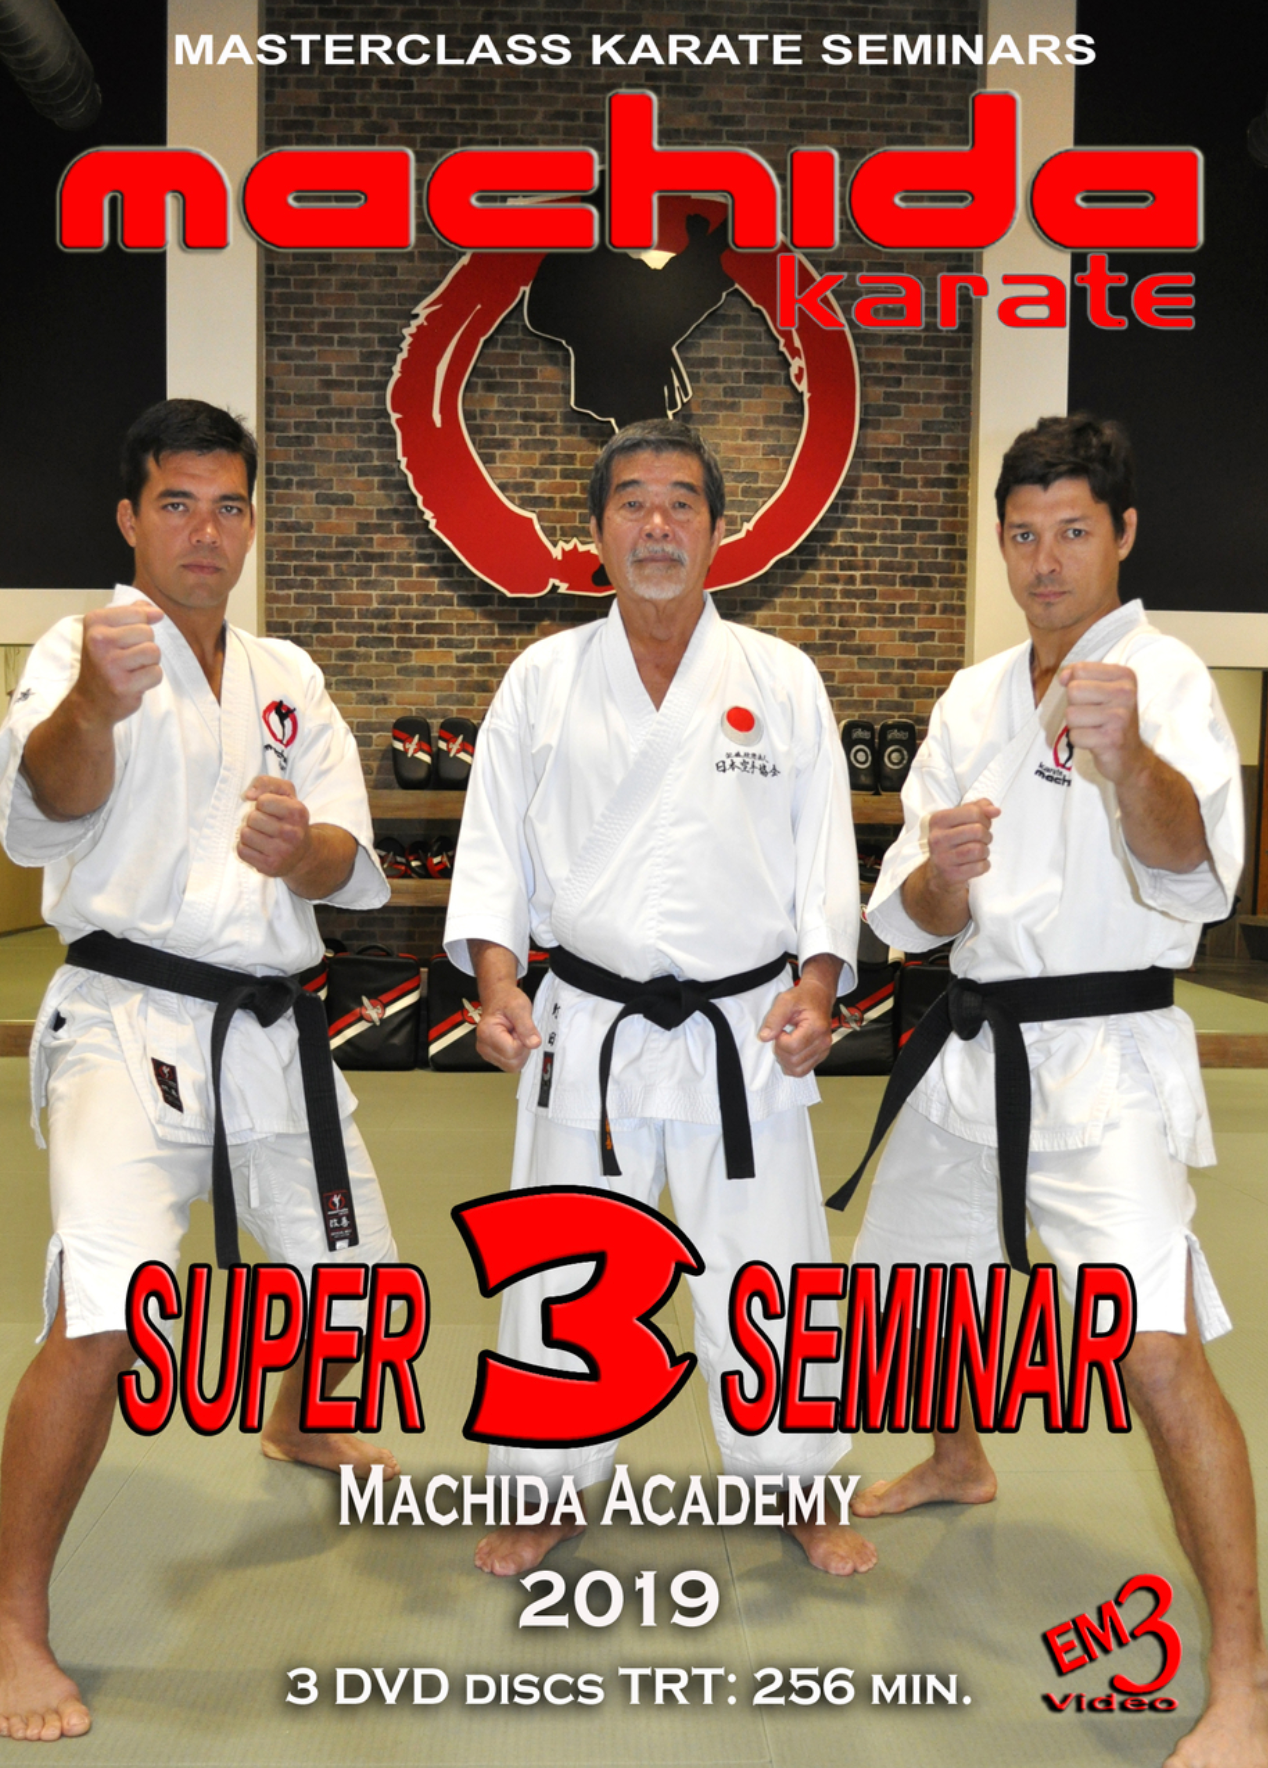 Machida Karate 2019 Super Seminar 3 DVD Set - Budovideos Inc